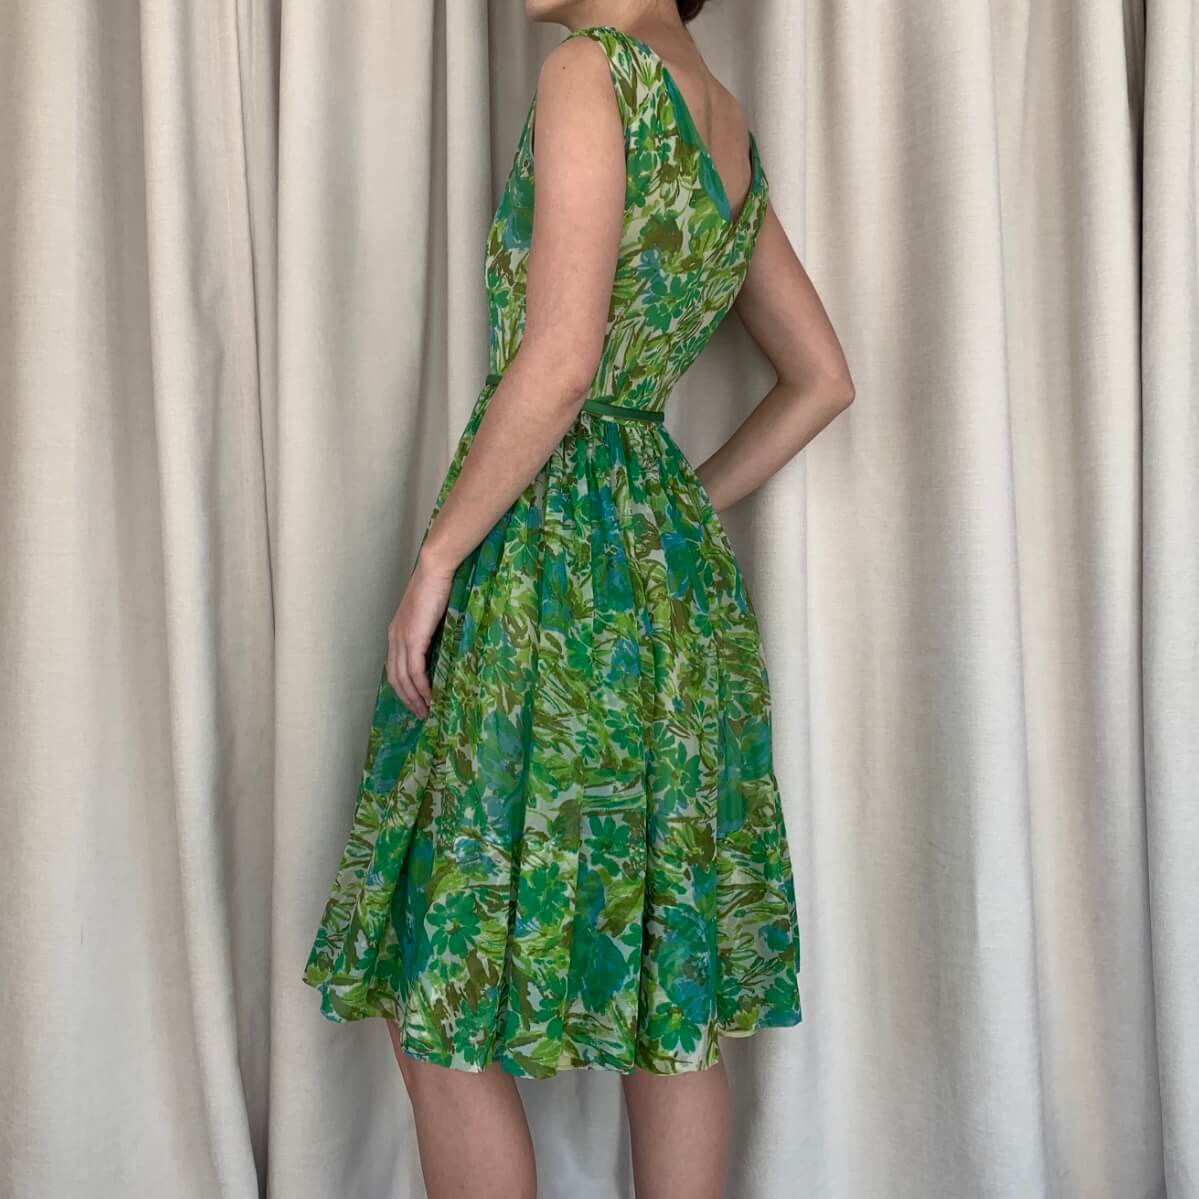 Vintage green 50s dress viewed at an angle